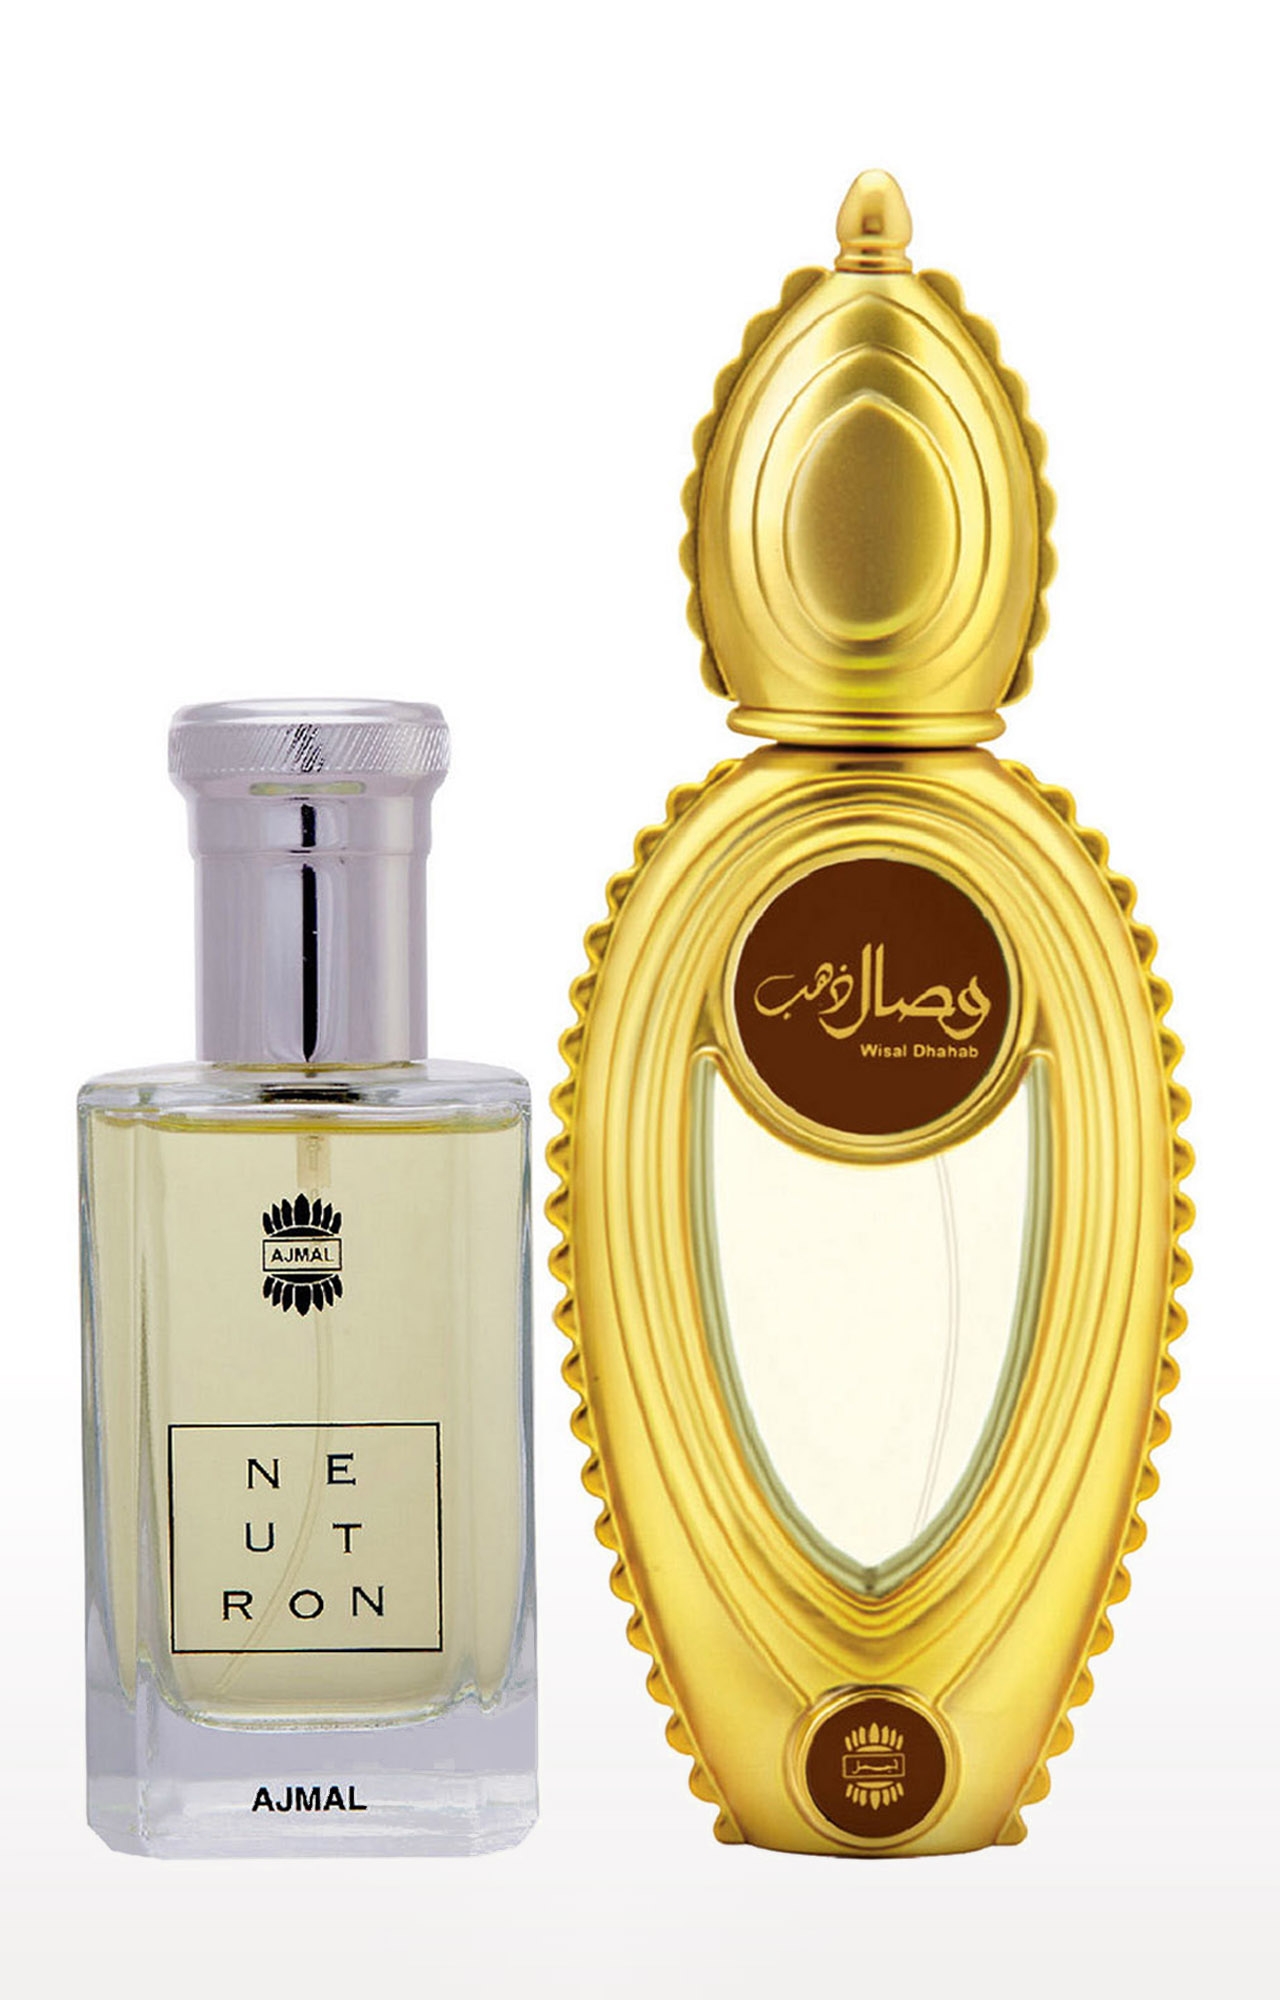 Ajmal | Ajmal Neutron EDP Fruity Perfume 100ml for Men and Wisal Dhahab EDP Fruity Perfume 50ml for Men 0